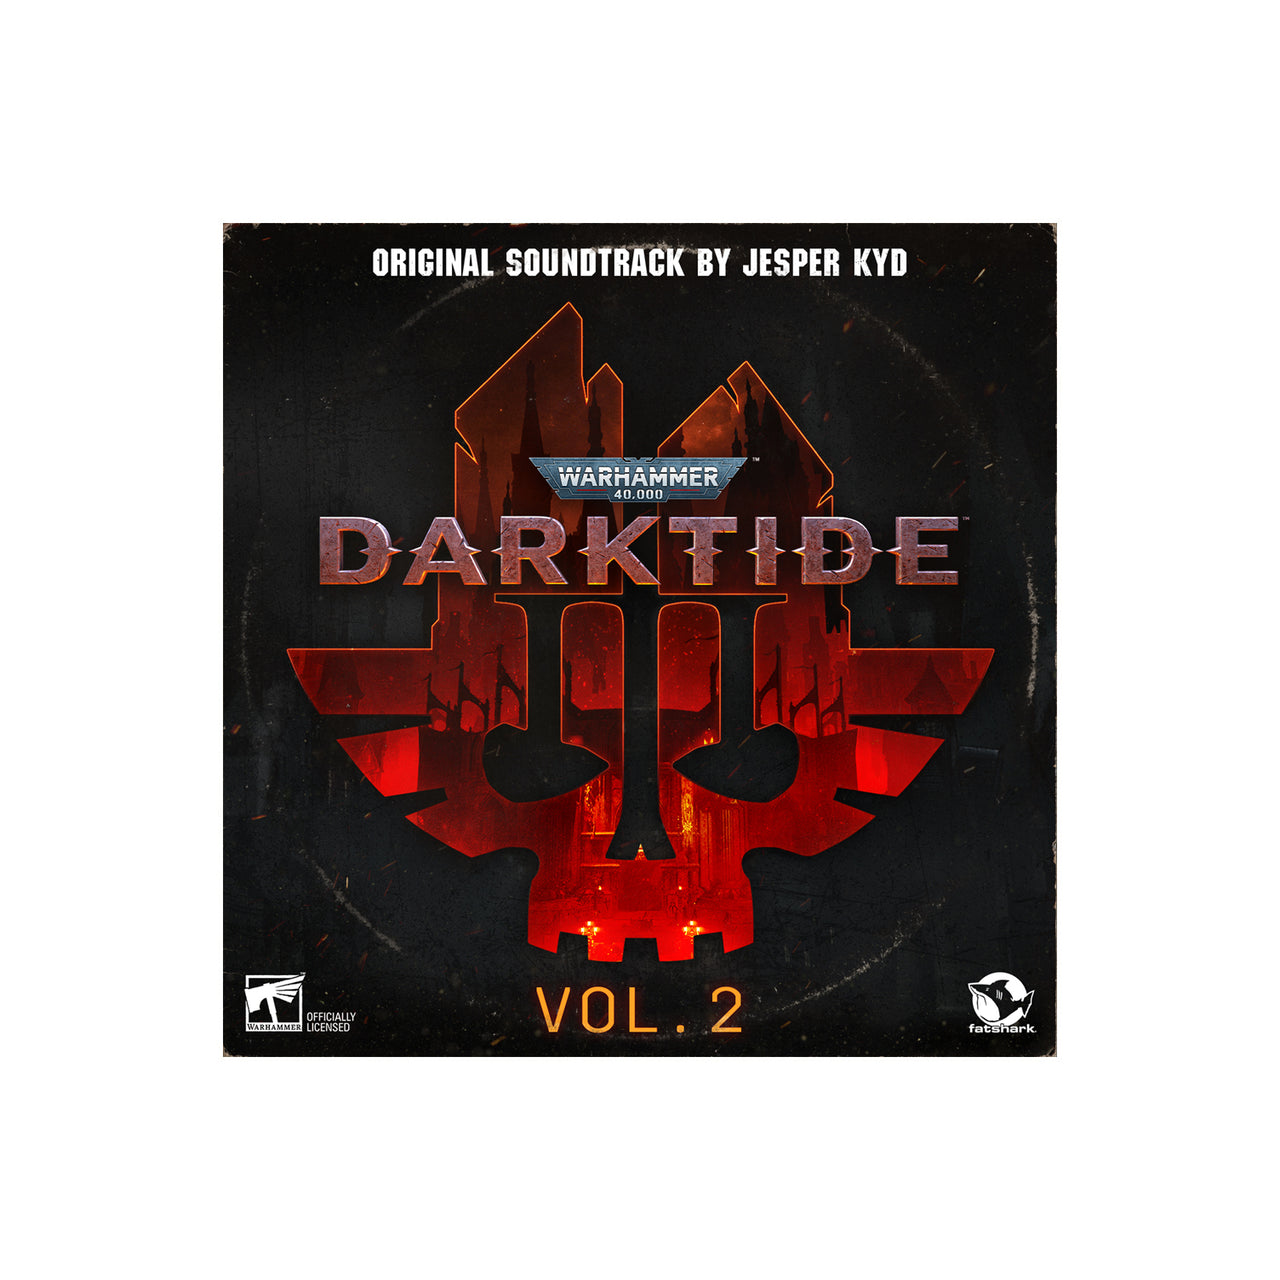 Warhammer 40,000: Darktide Vol. 2 (Original Soundtrack)